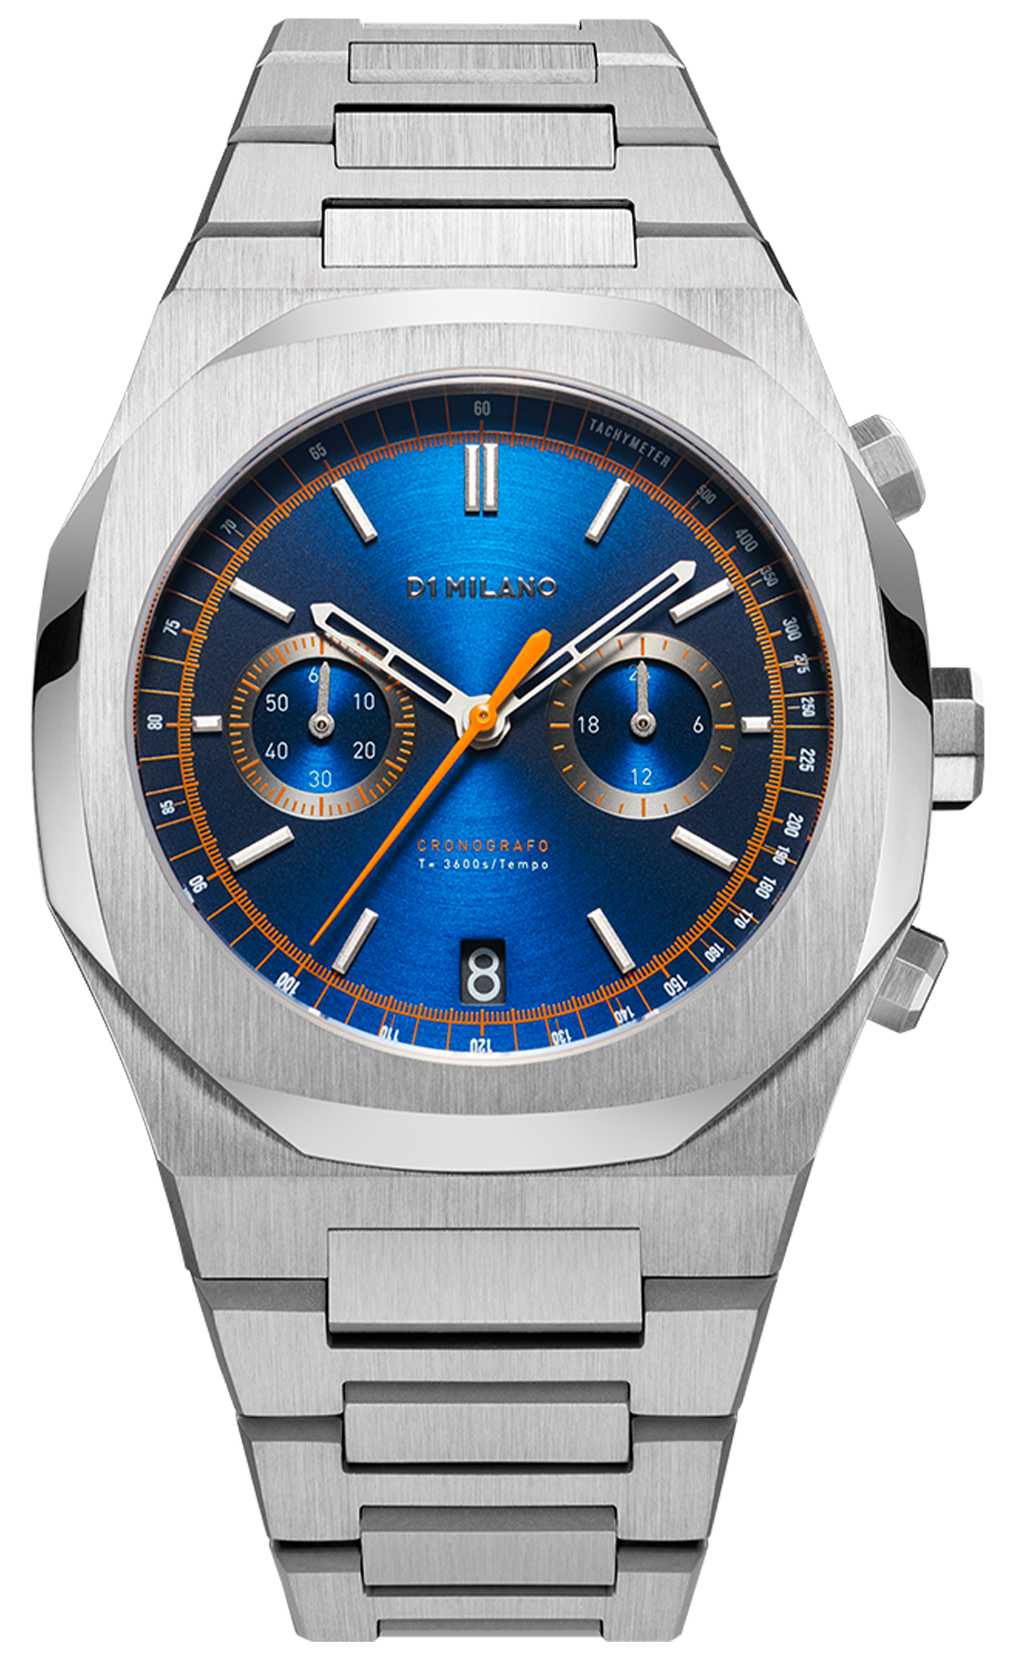 Photos - Wrist Watch Milano D1  Watch Cronografo DLM-002 